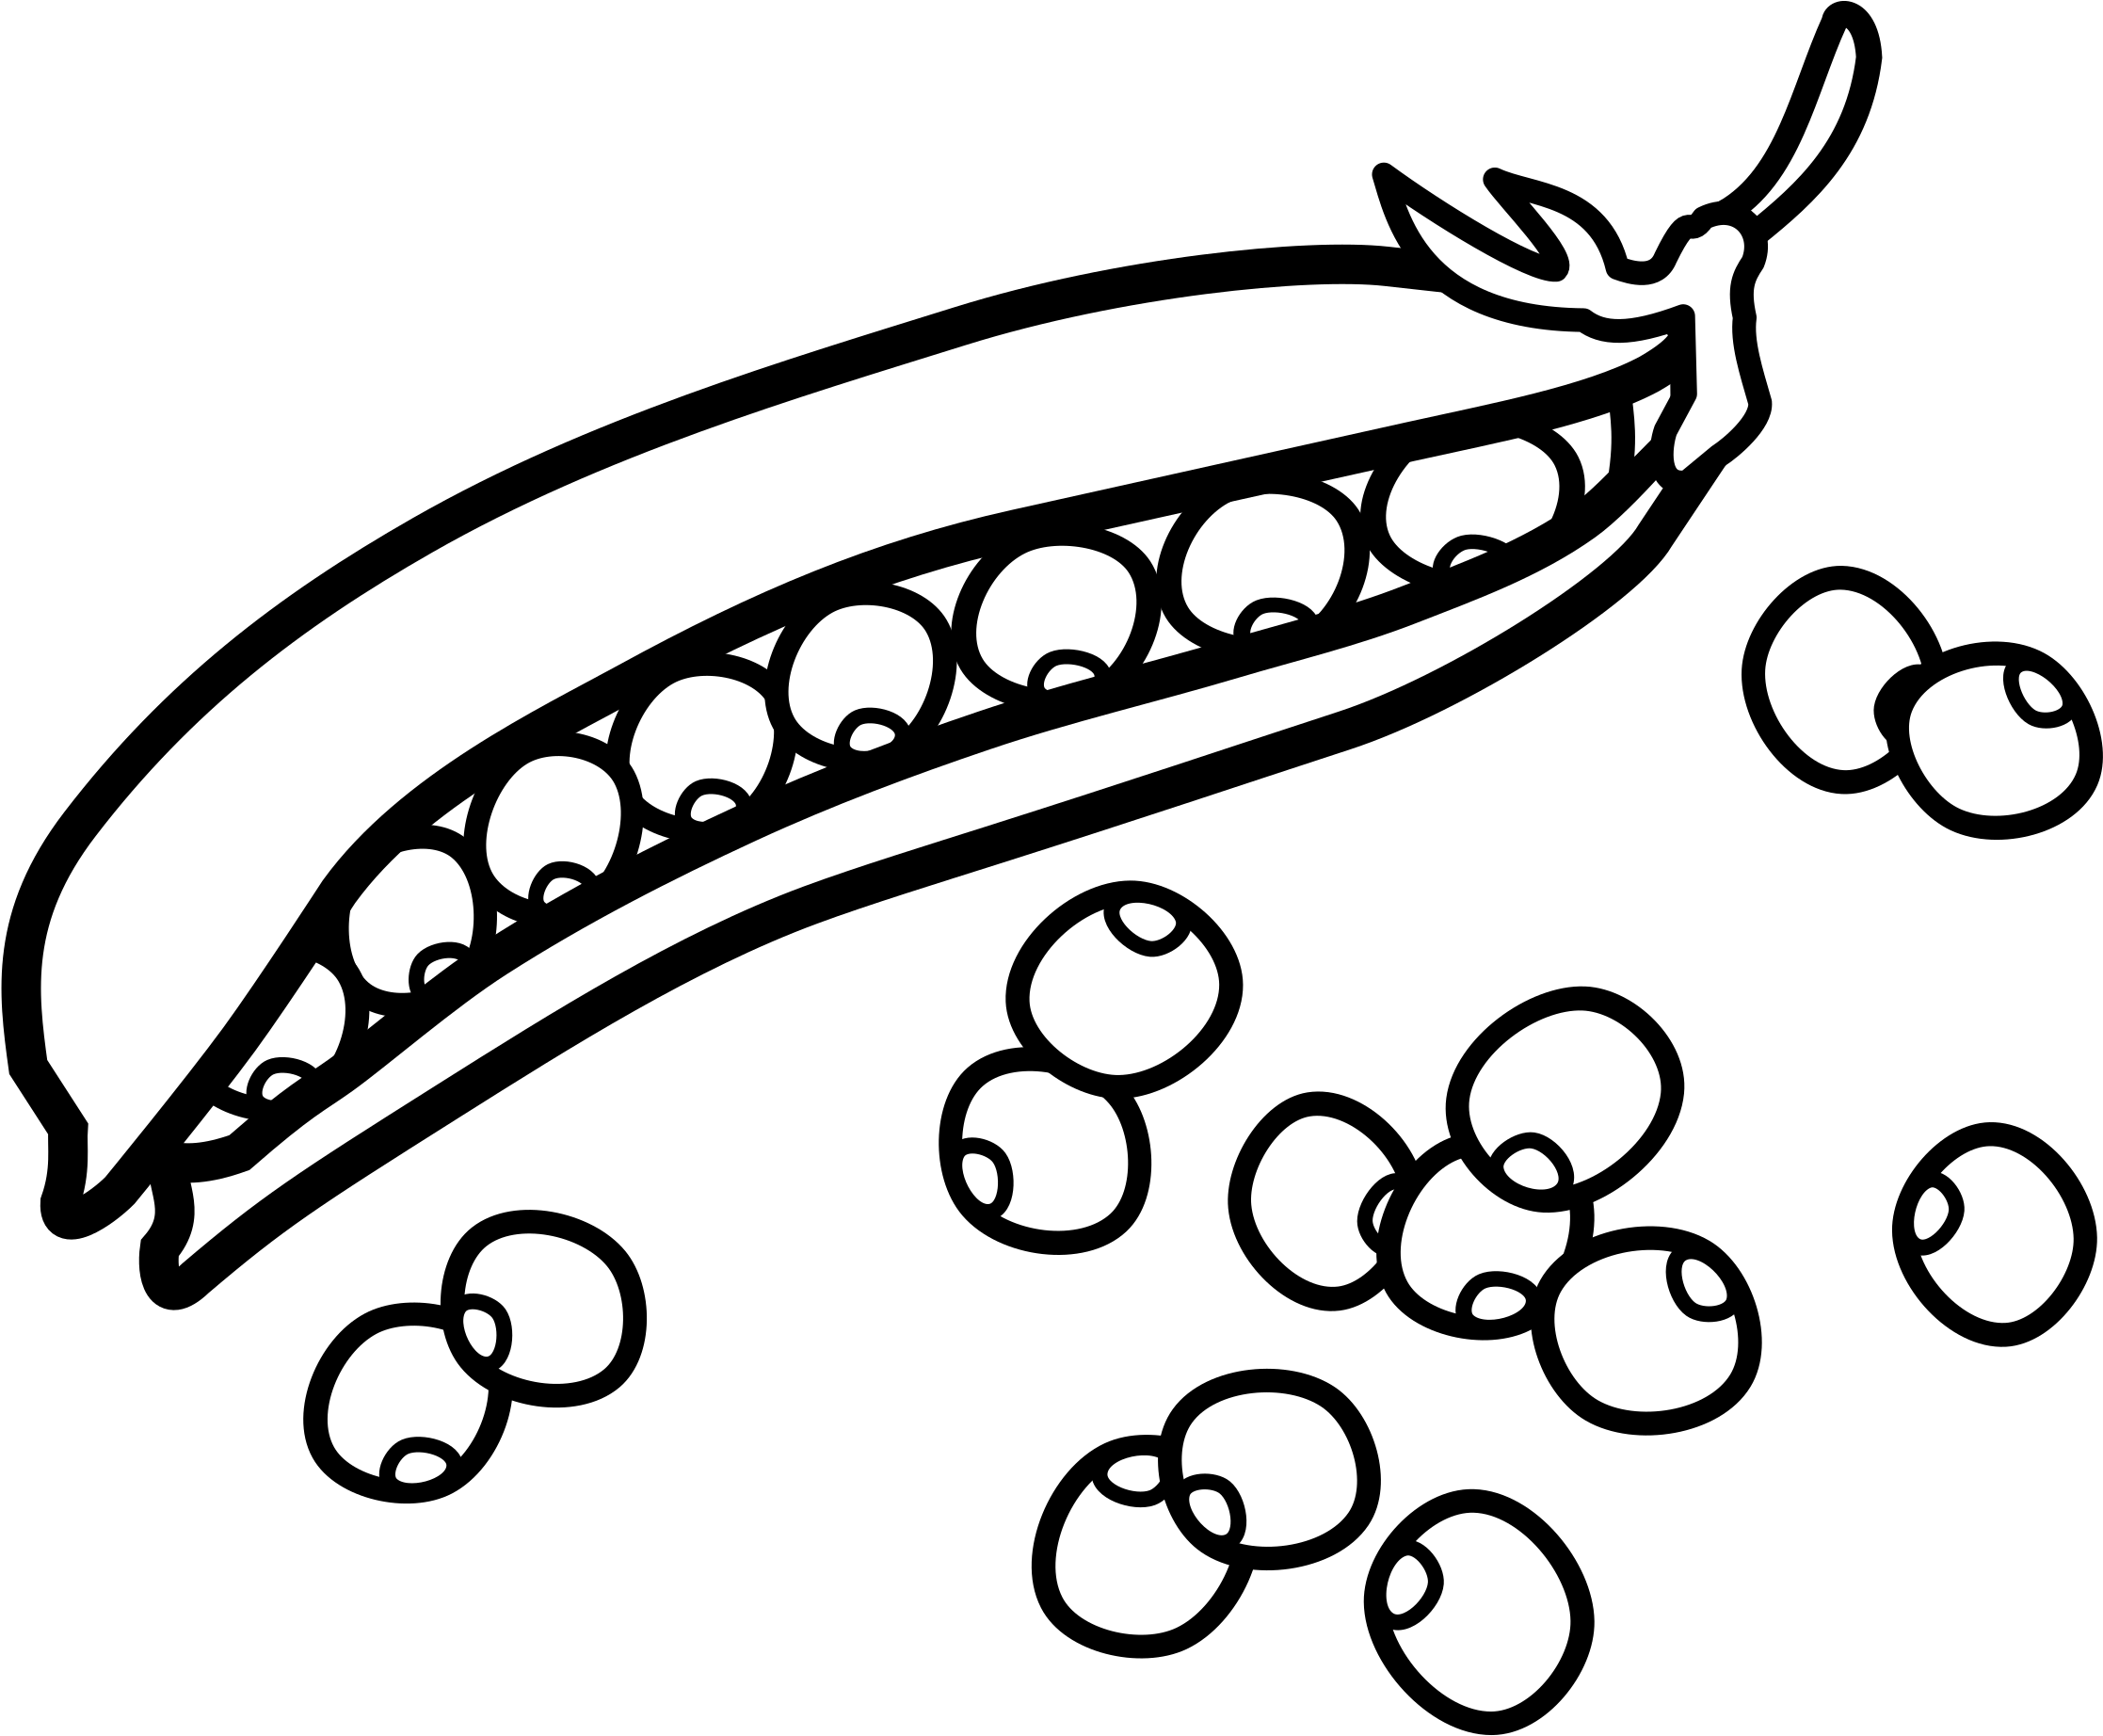 peas black and white clip art
